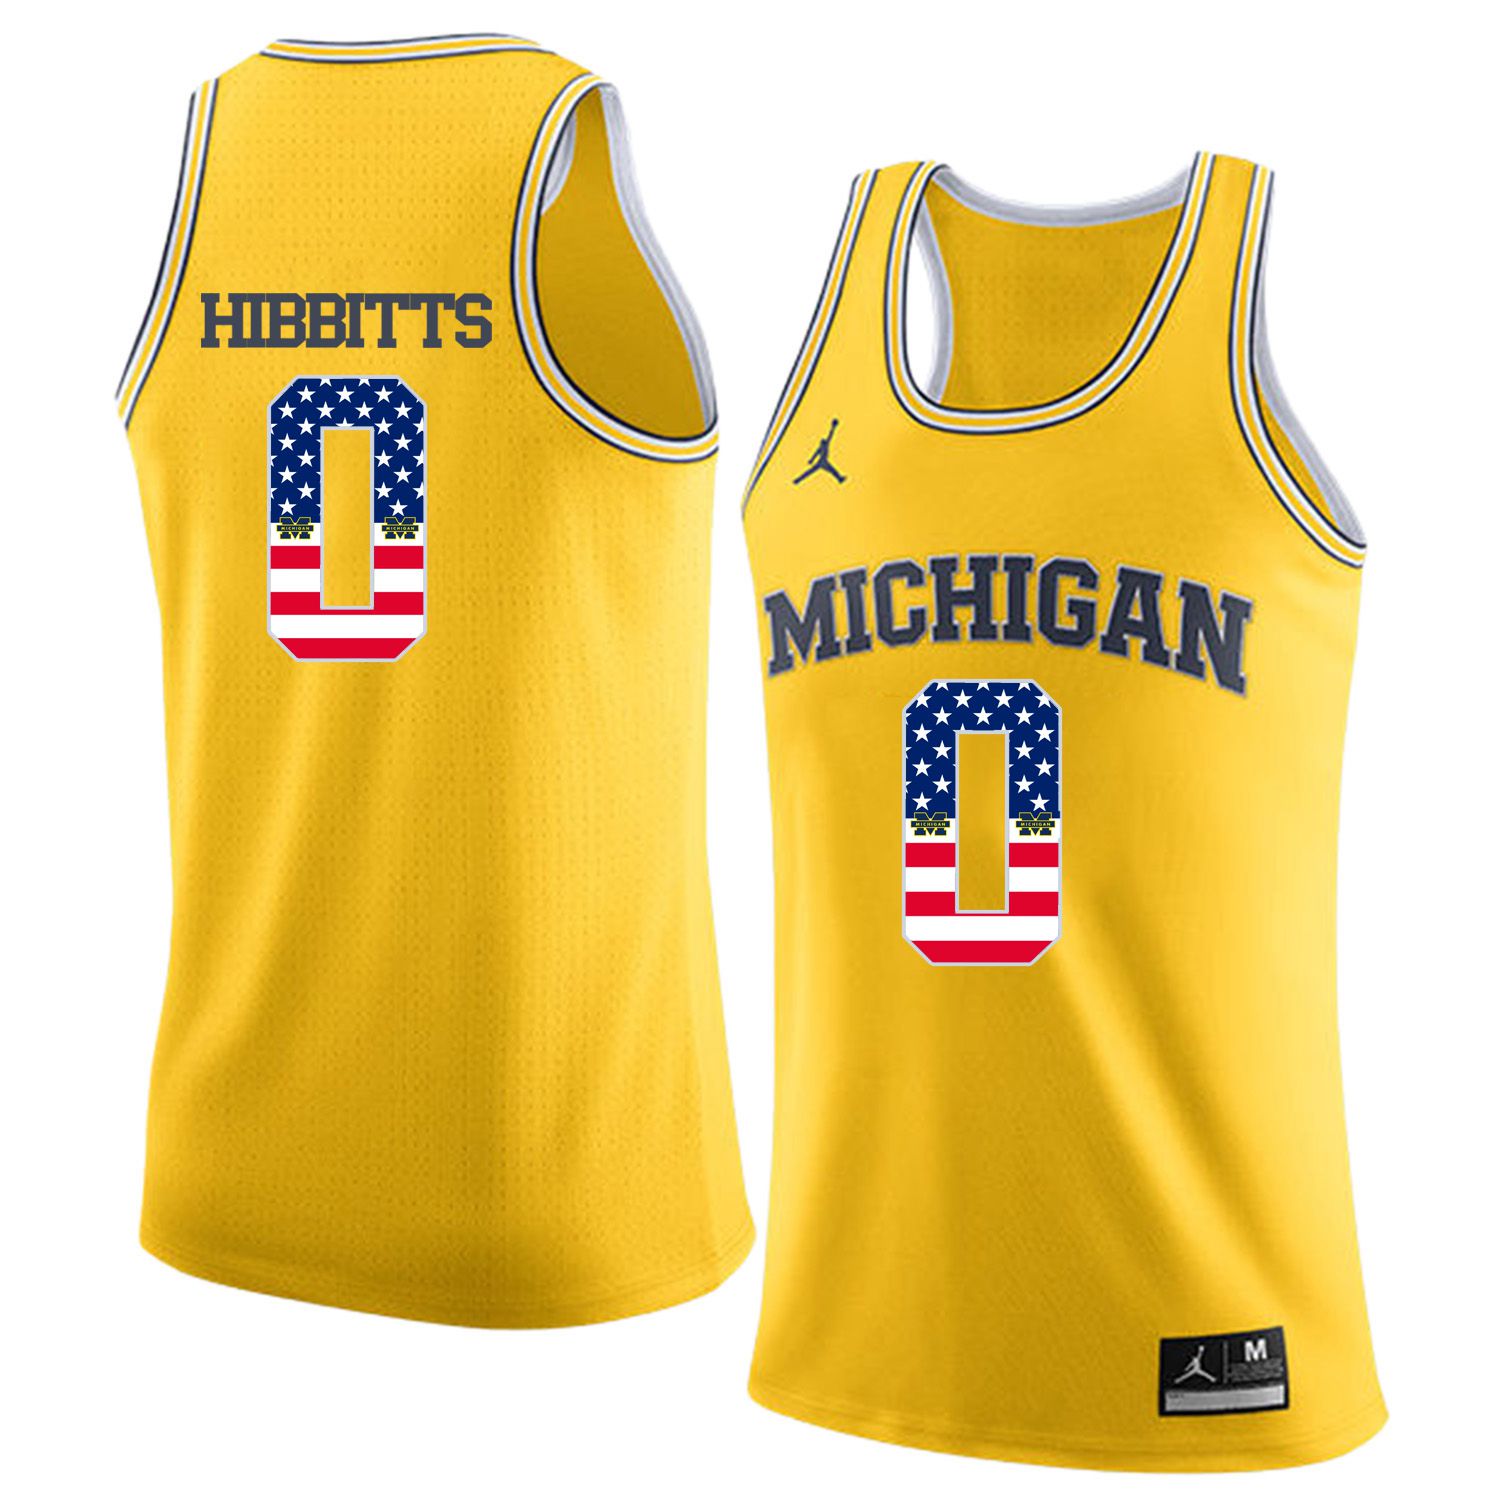 Men Jordan University of Michigan Basketball Yellow 0 Hibbitts Flag Customized NCAA Jerseys